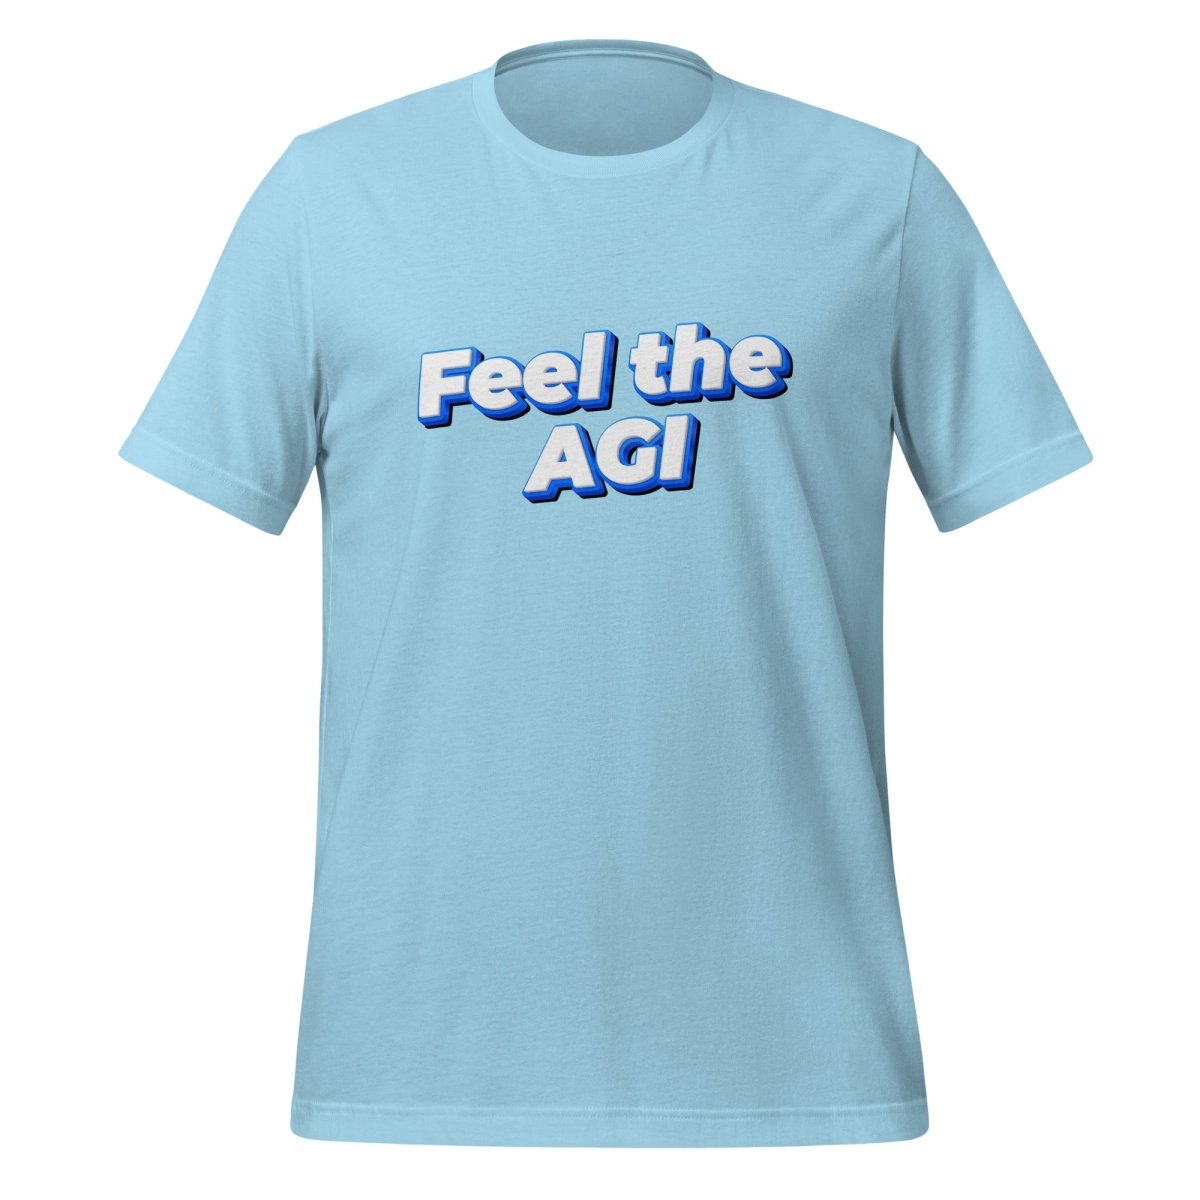 Feel the AGI T - Shirt 2 (unisex) - Ocean Blue - AI Store